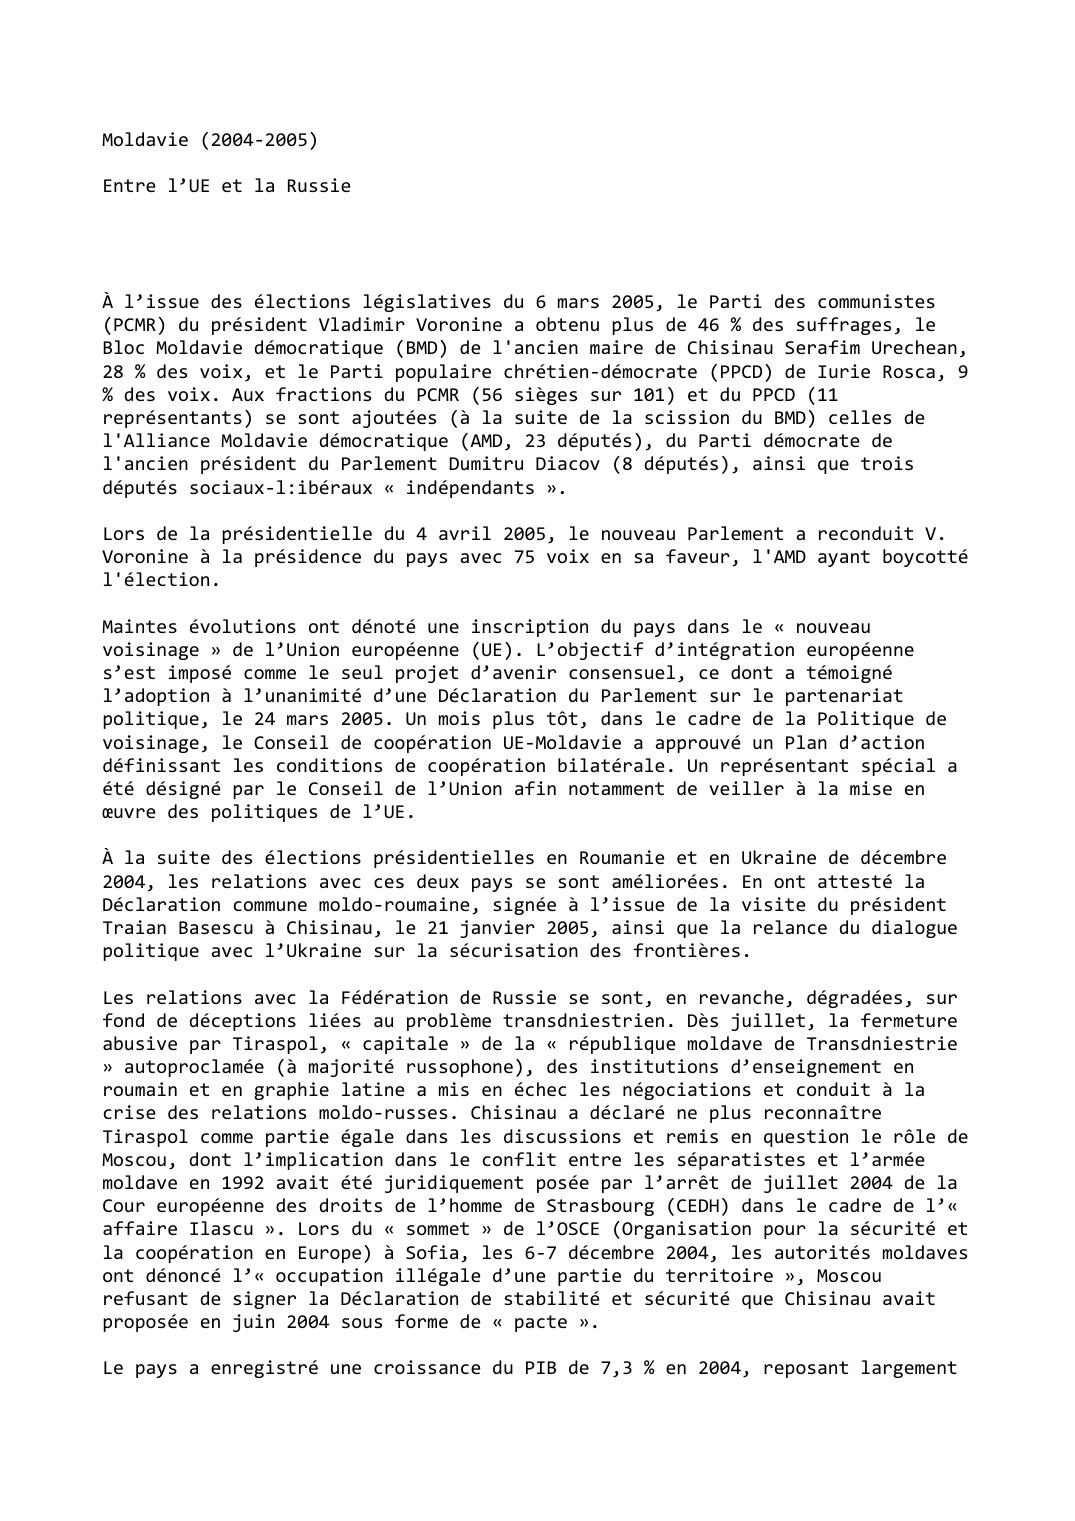 Prévisualisation du document Moldavie (2004-2005)